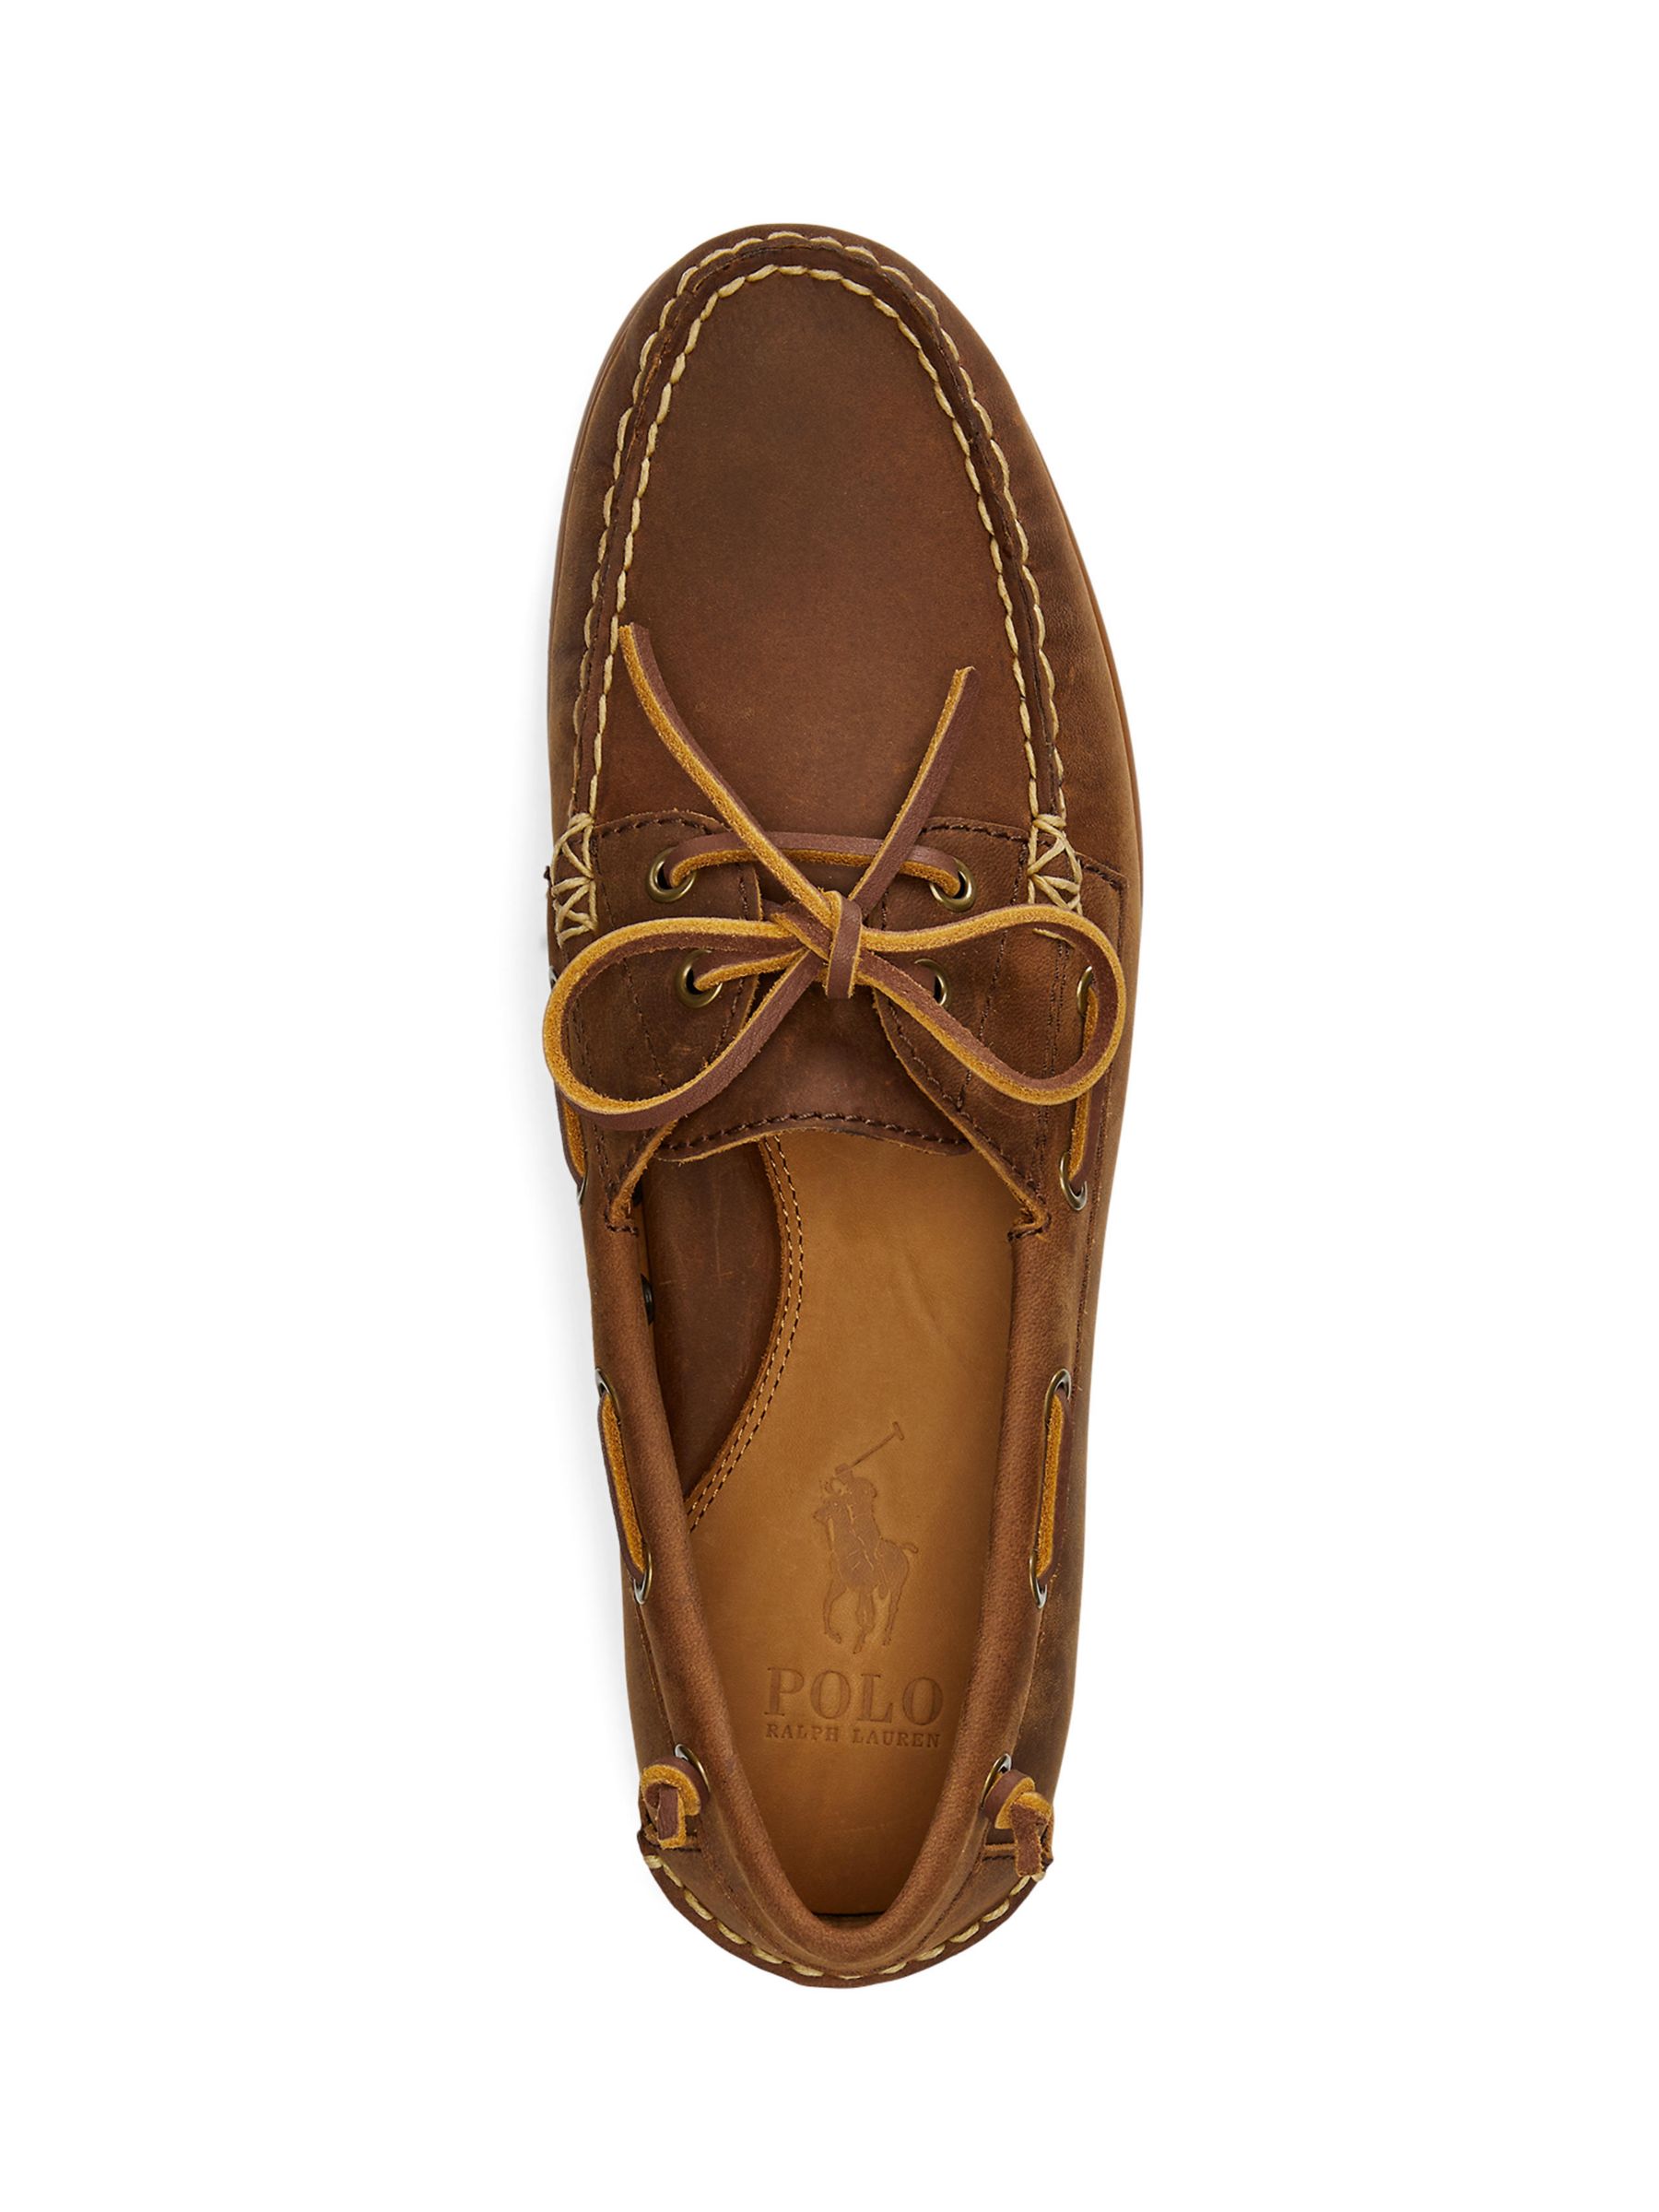 Ralph Lauren Merton Deep Saddle Boat Shoes, Tan, 7